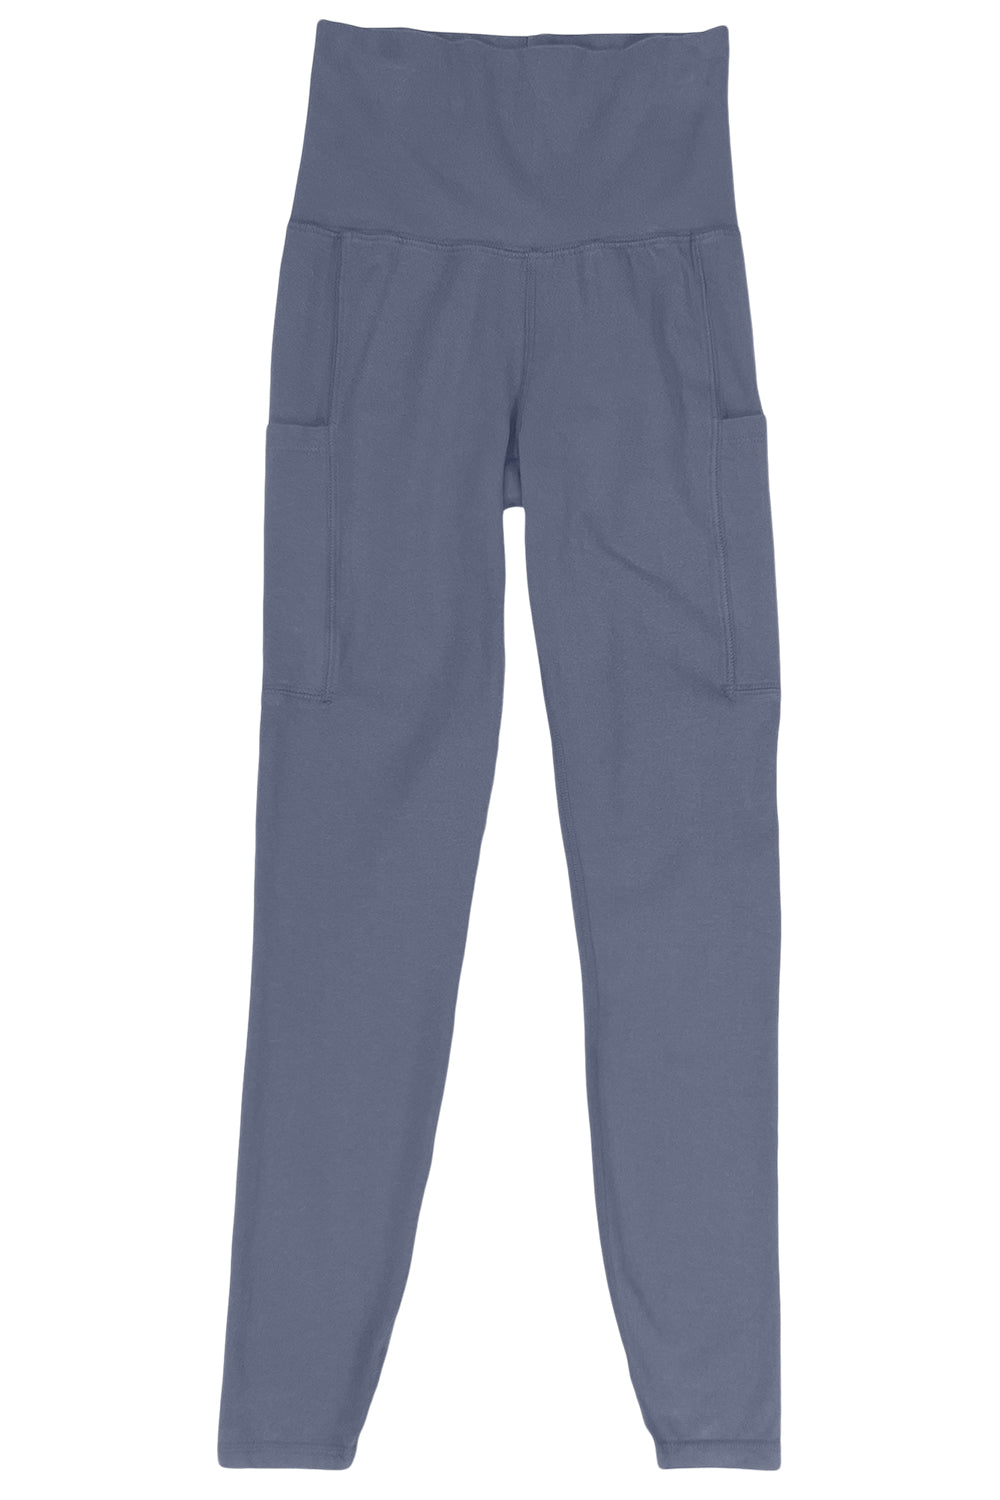 Orosi Pocket Leggings - Mid Rise | Jungmaven Hemp Clothing & Accessories / Color: Diesel Gray